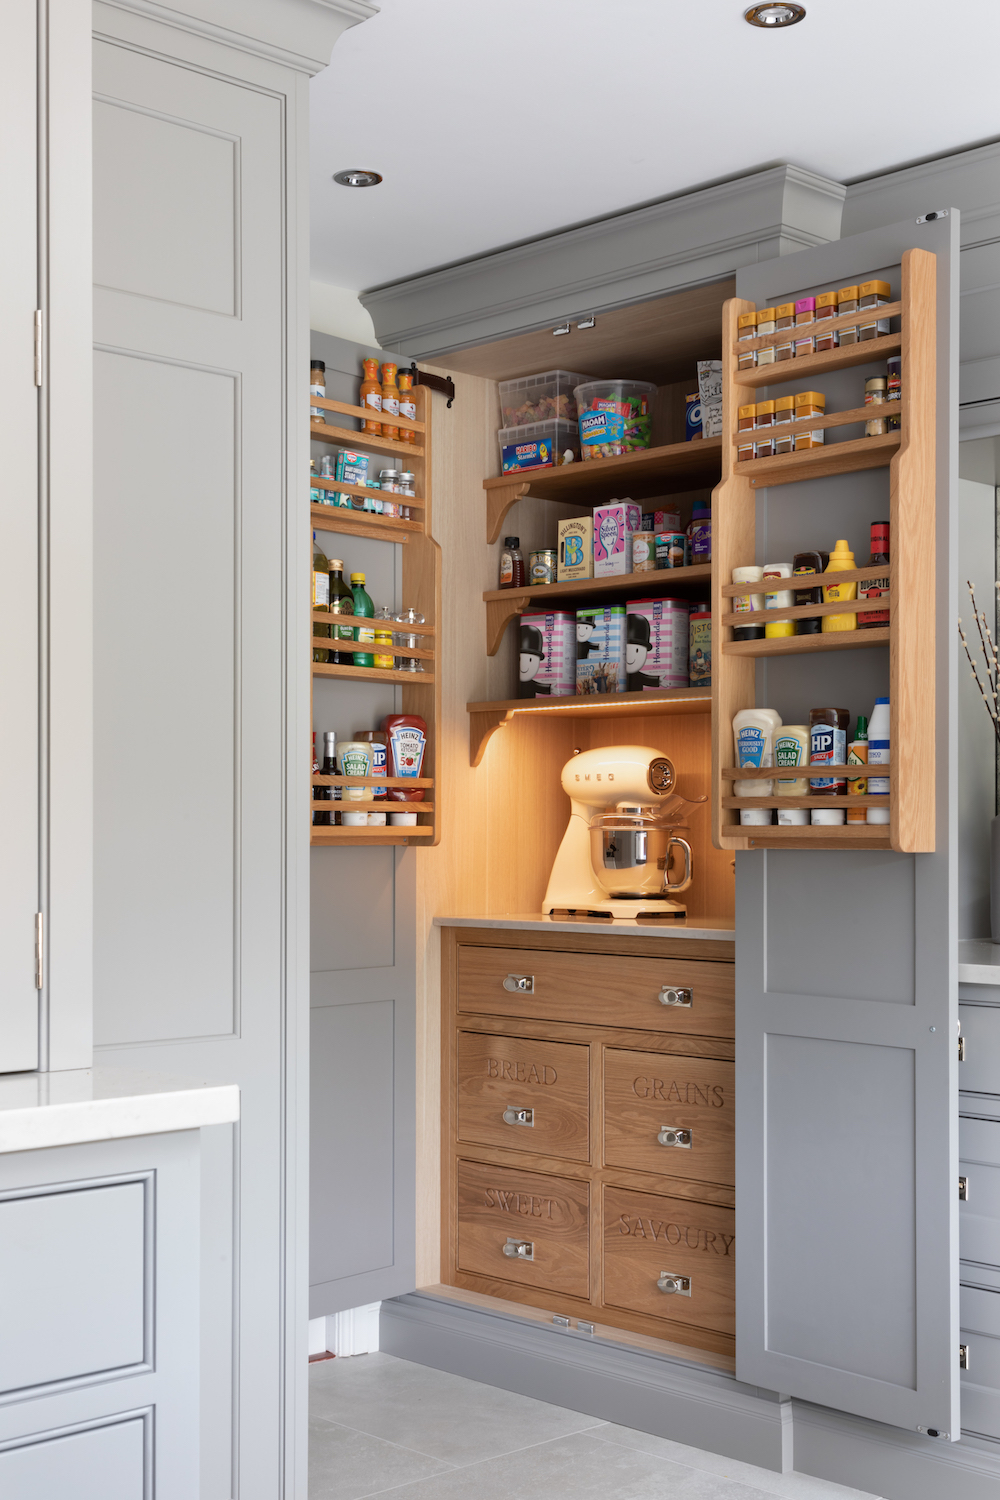 Organized custom kitchen cabinet